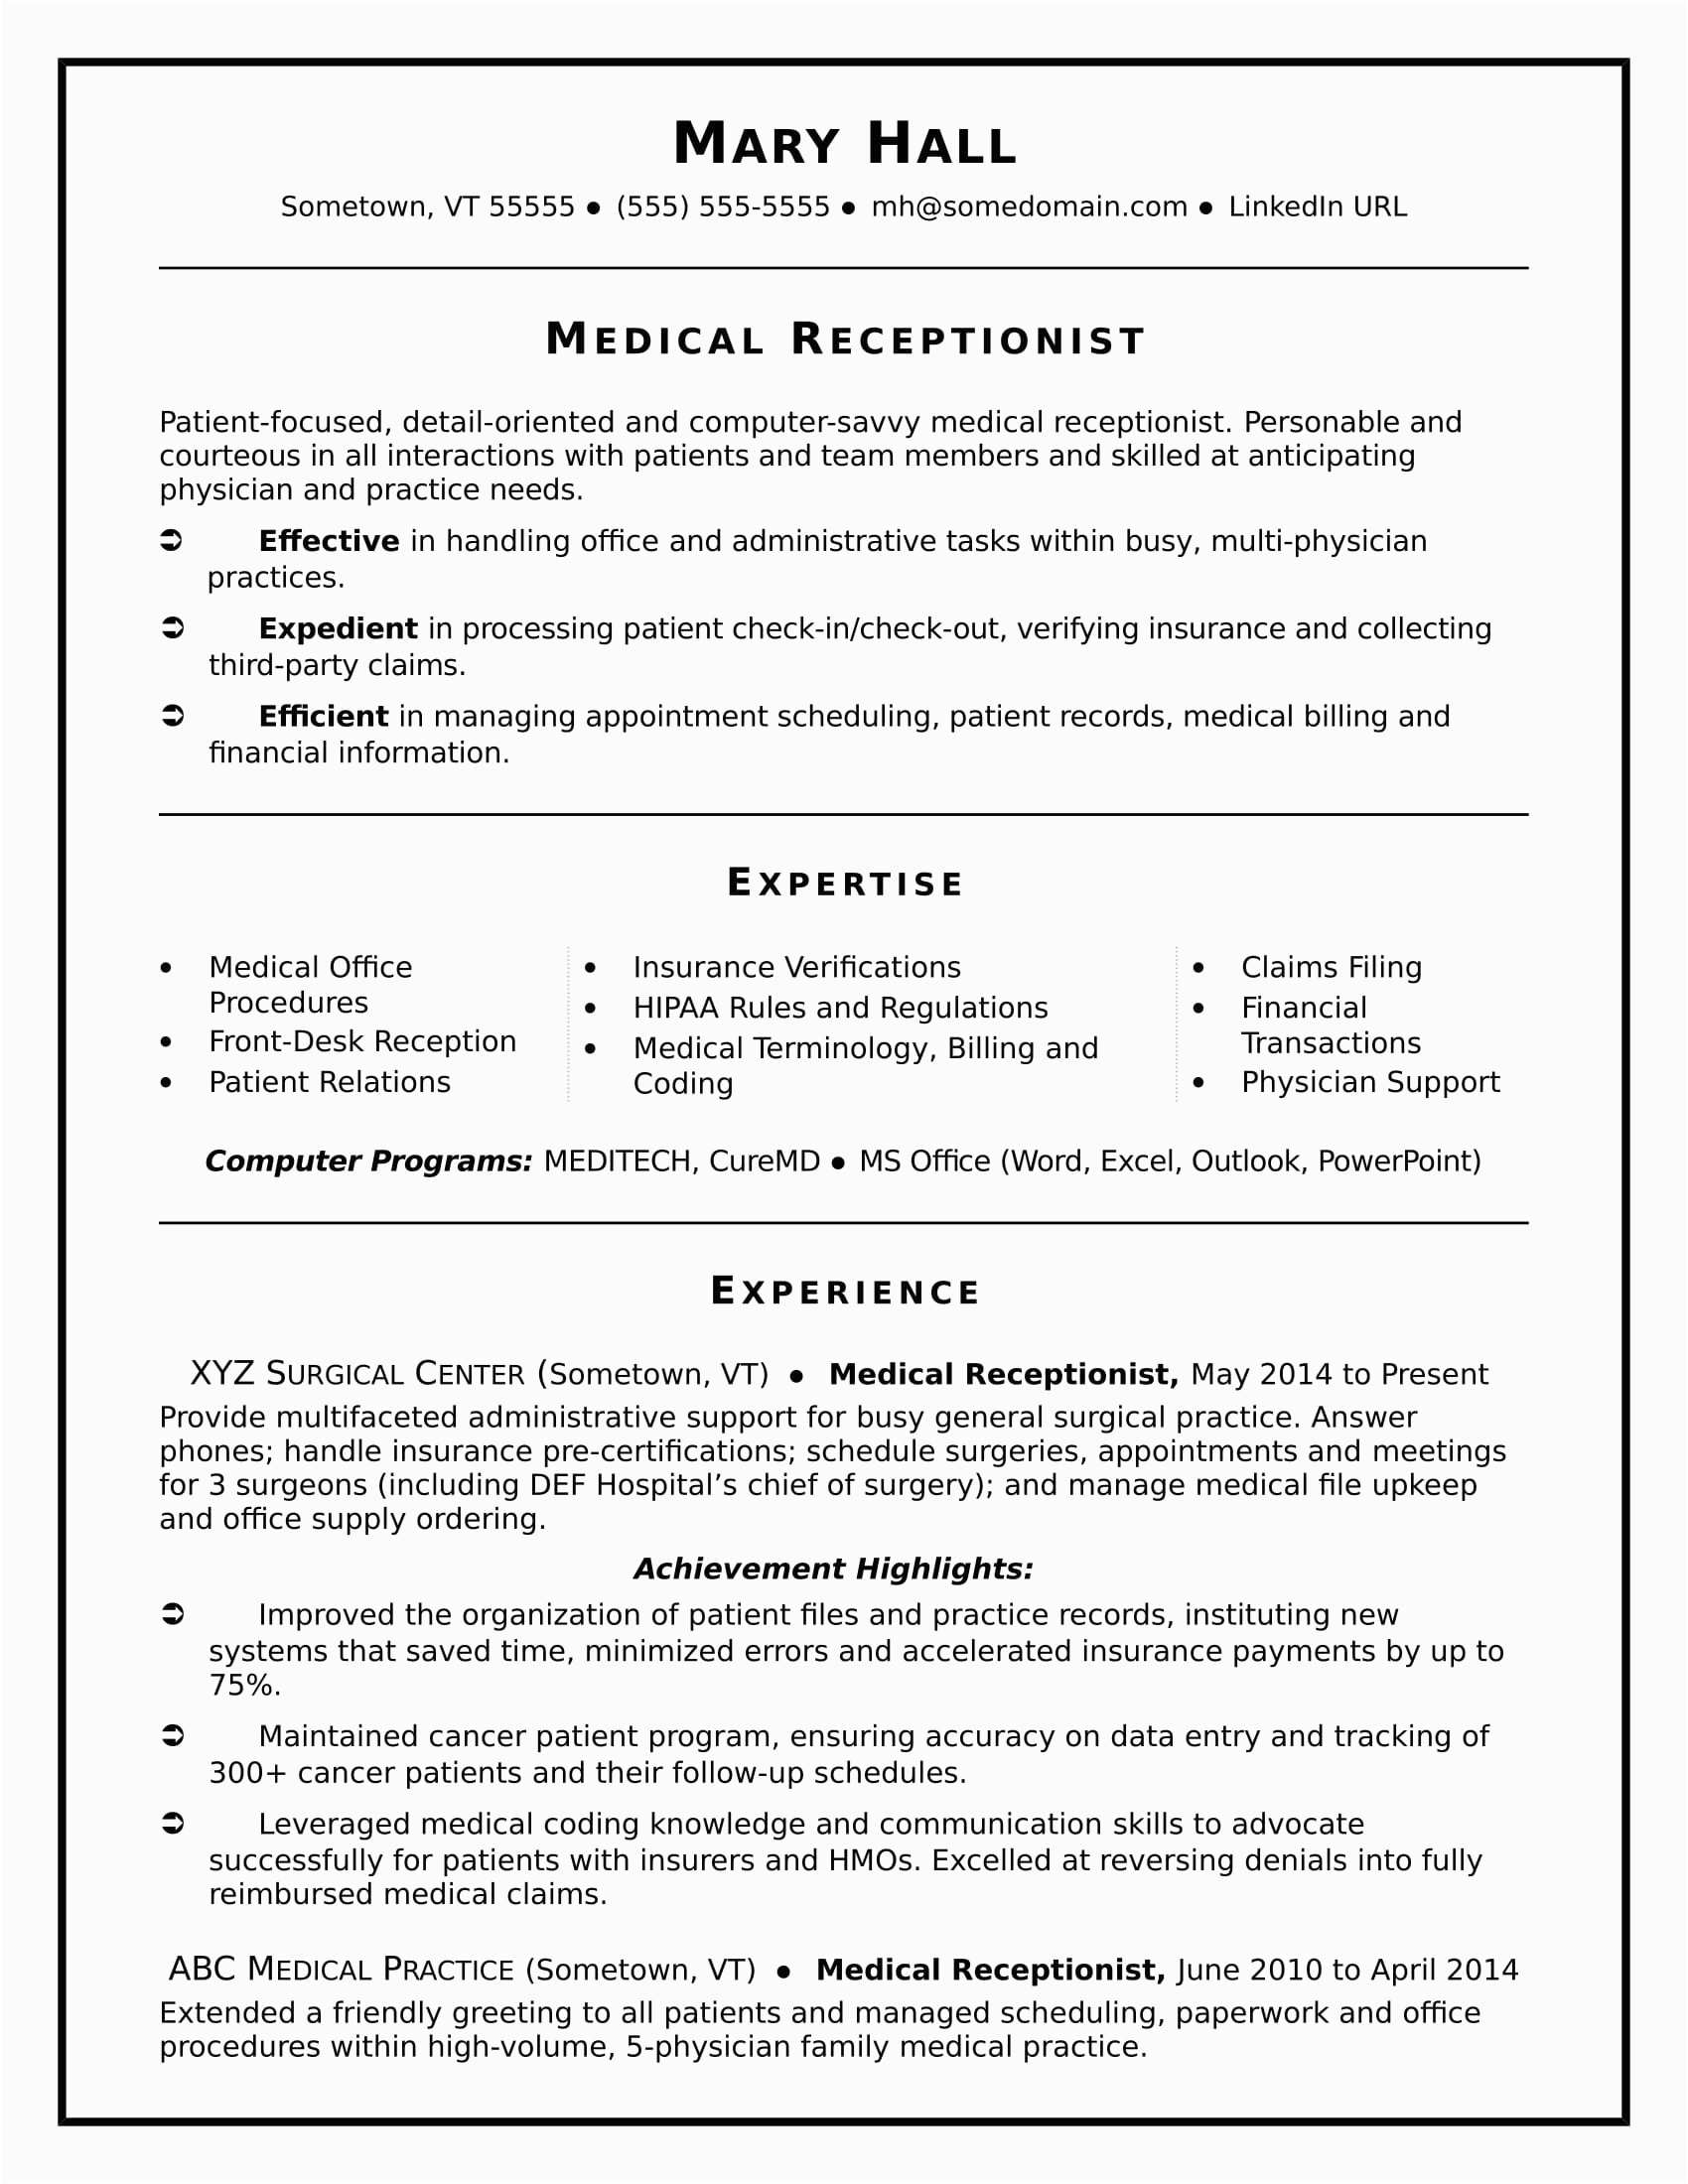 Free Resume Samples for Medical Receptionist Medical Receptionist Resume Sample